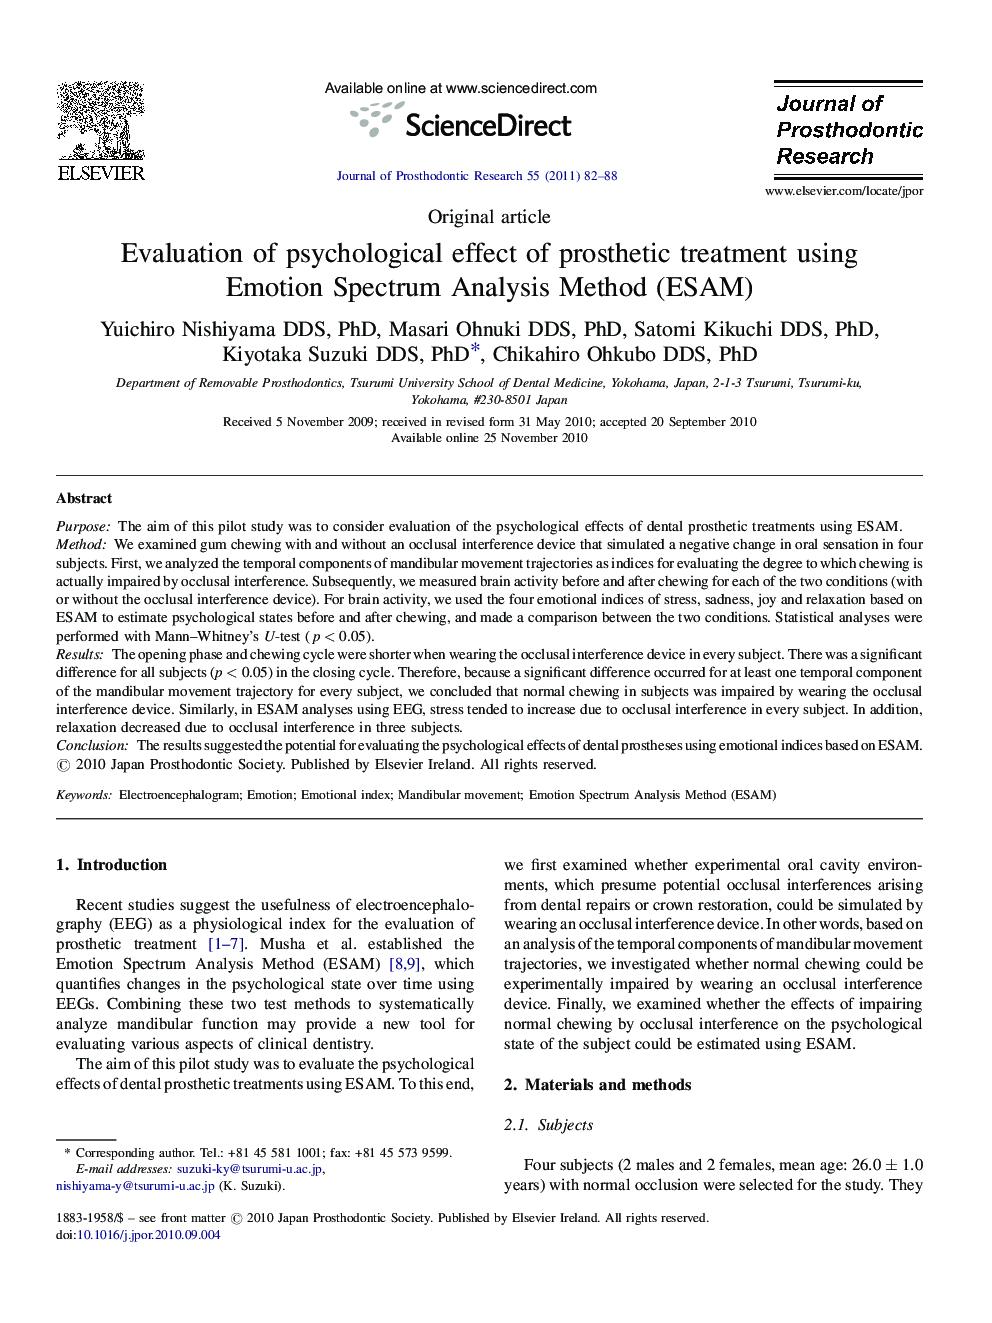 Evaluation of psychological effect of prosthetic treatment using Emotion Spectrum Analysis Method (ESAM)